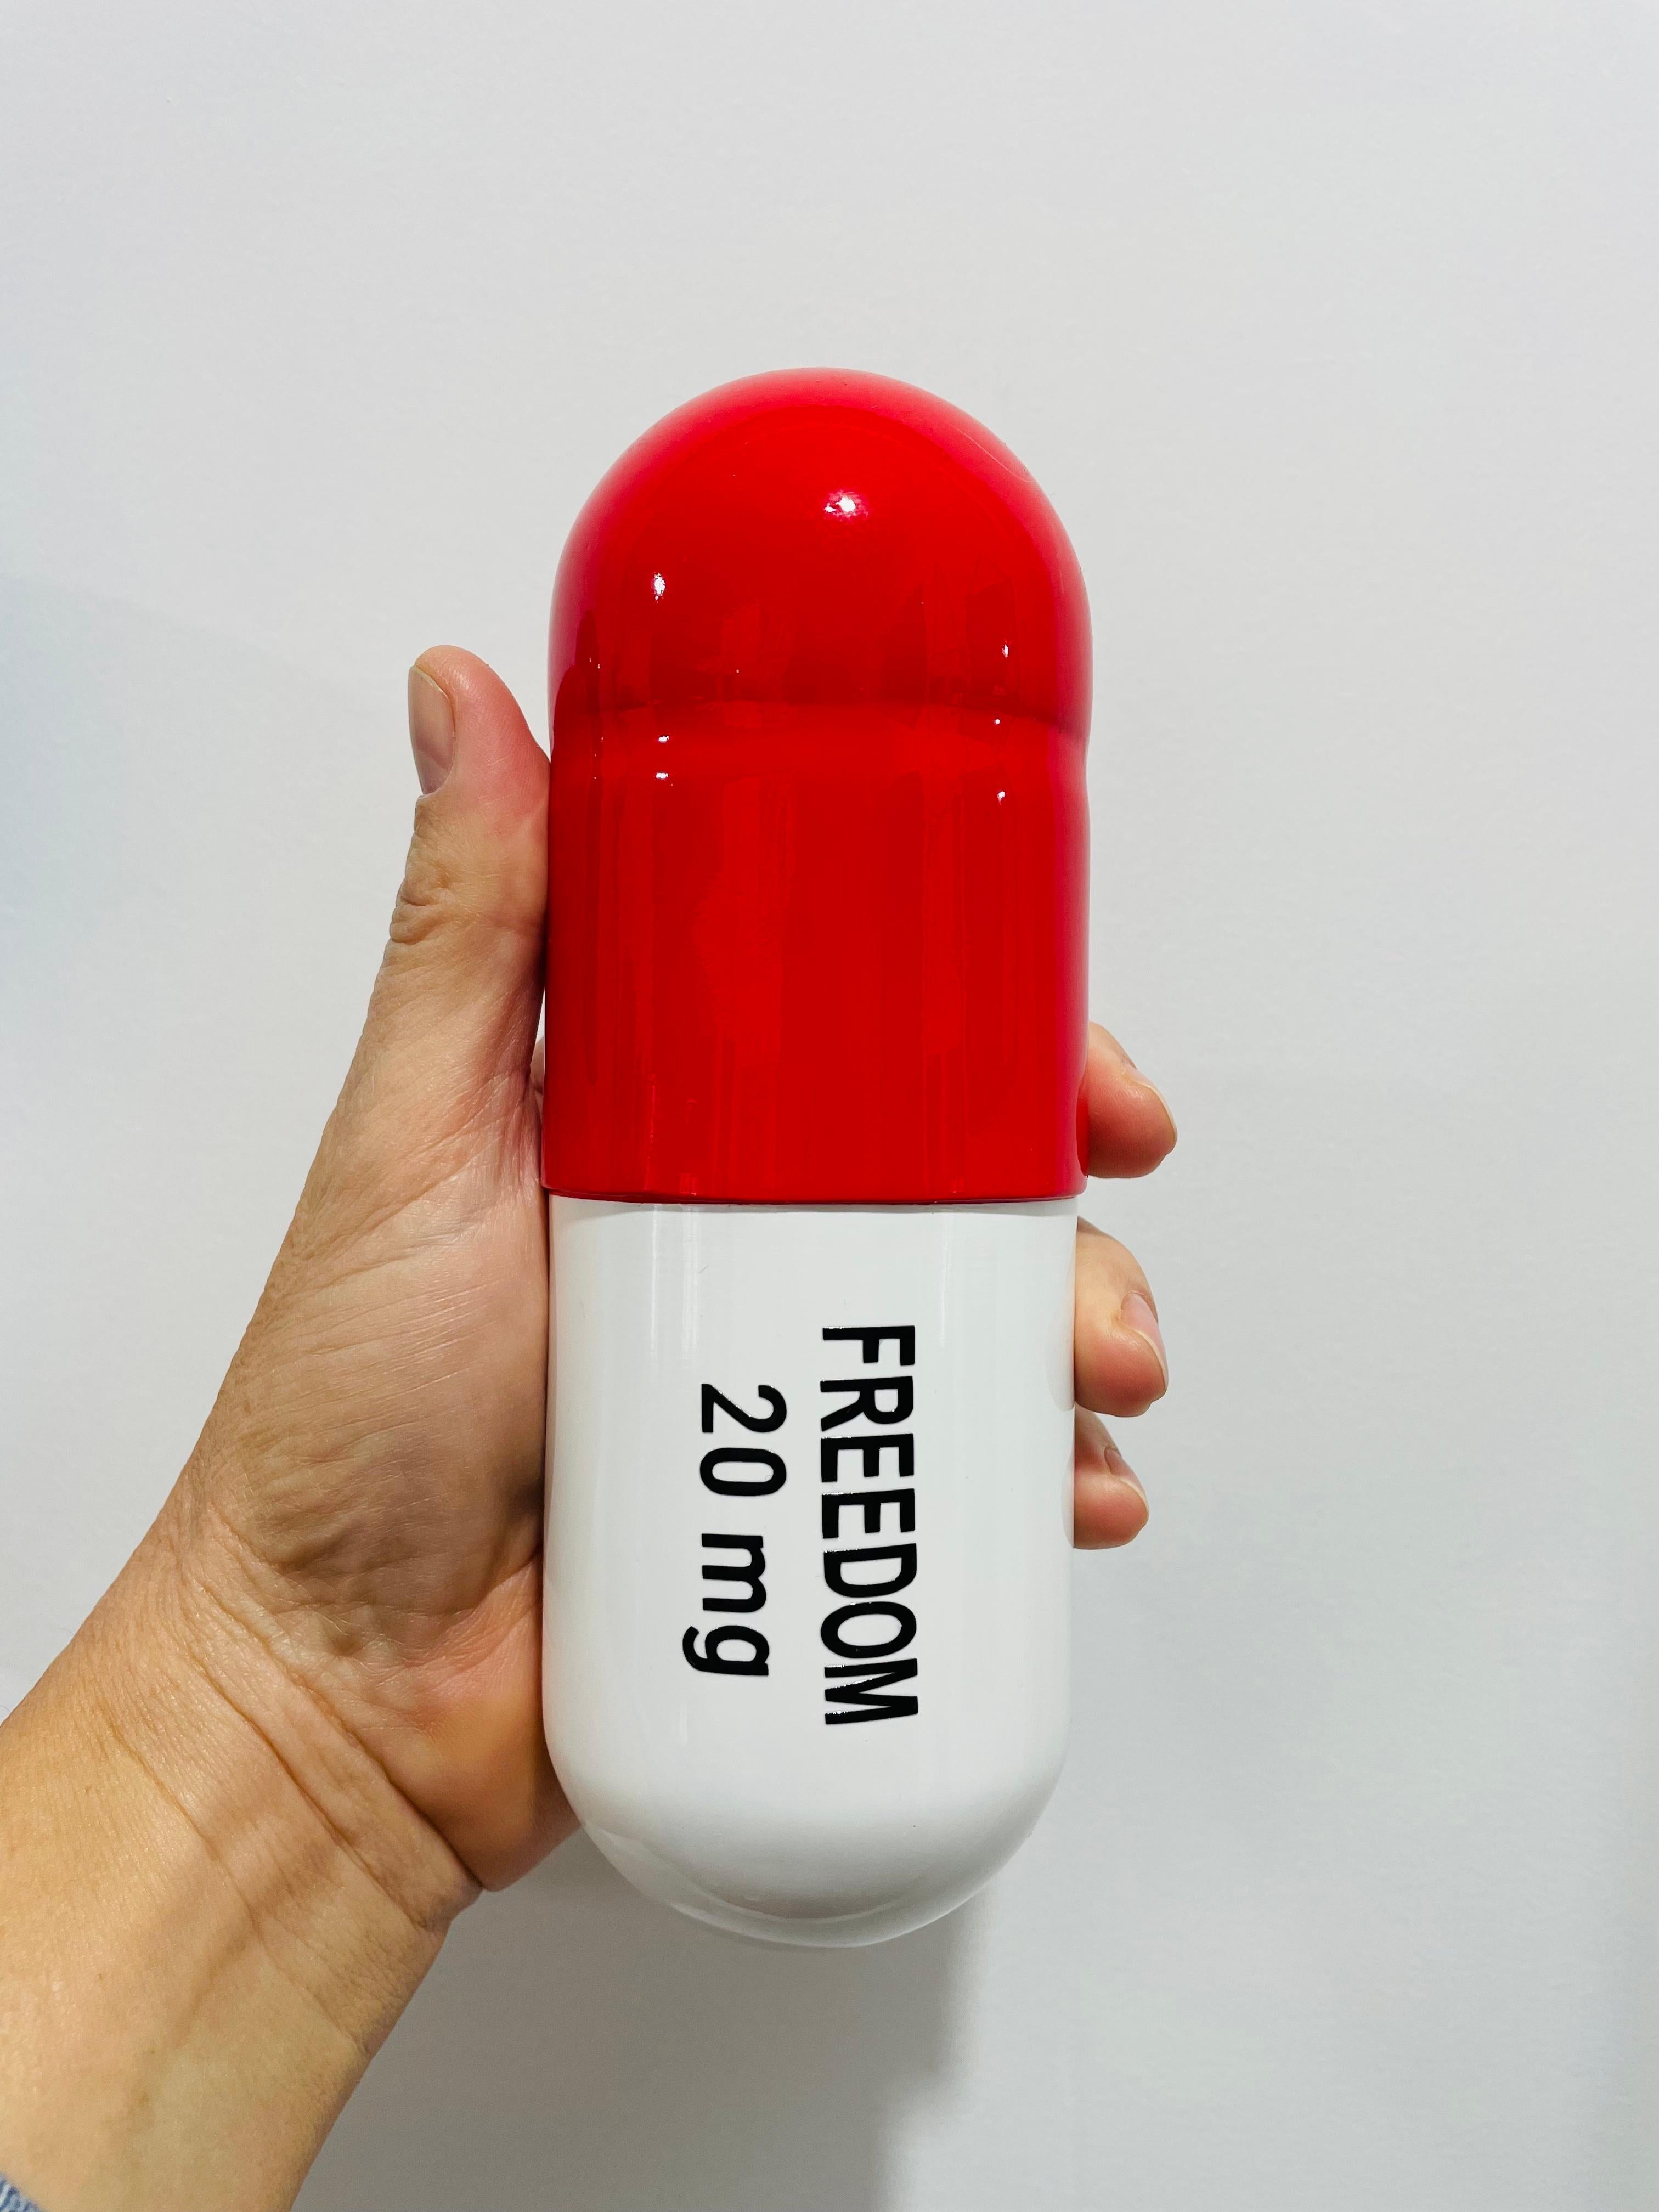 white cylinder pill